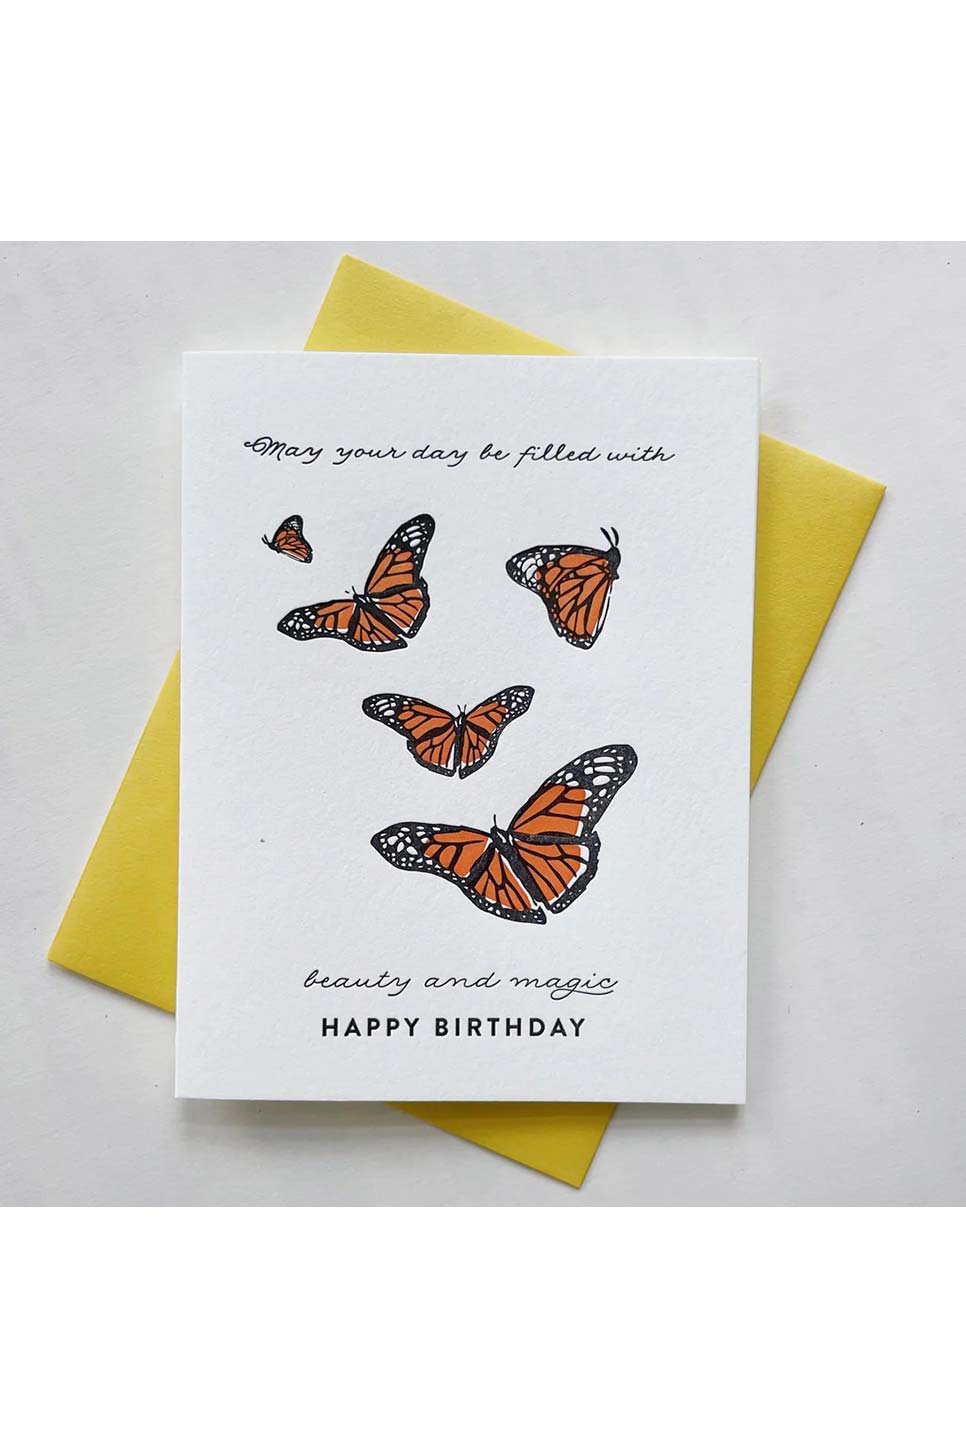 Steel Petal Press - Magic Butterfly Birthday Card